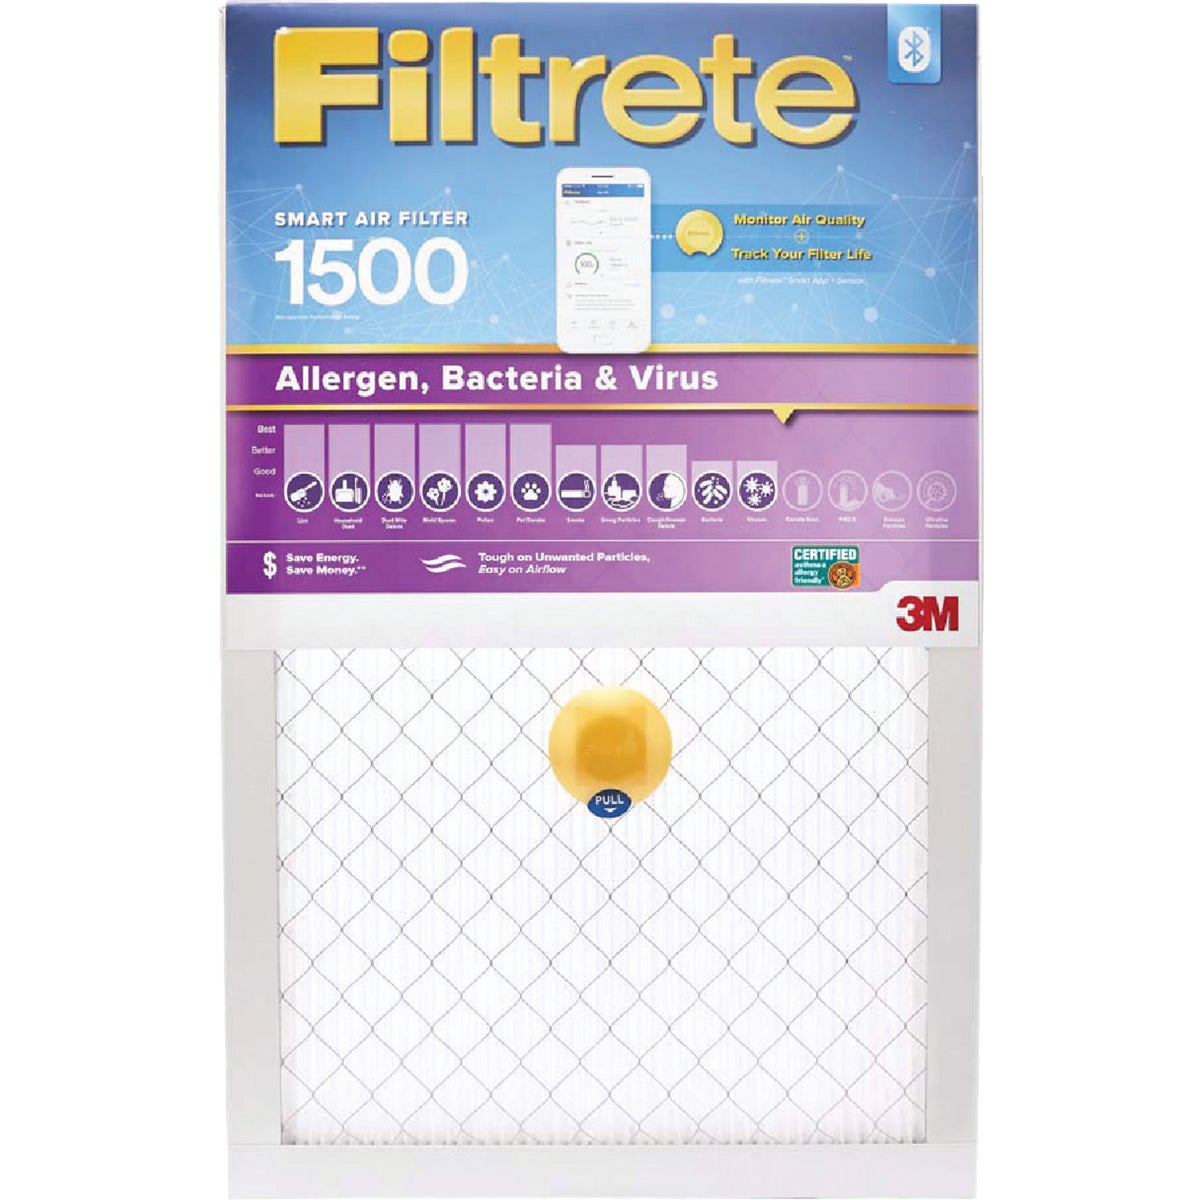 Filtrete 20 In. x 20 In. x 1 In. 1500 MPR Allergen, Bacteria & Virus Smart Furnace Filter